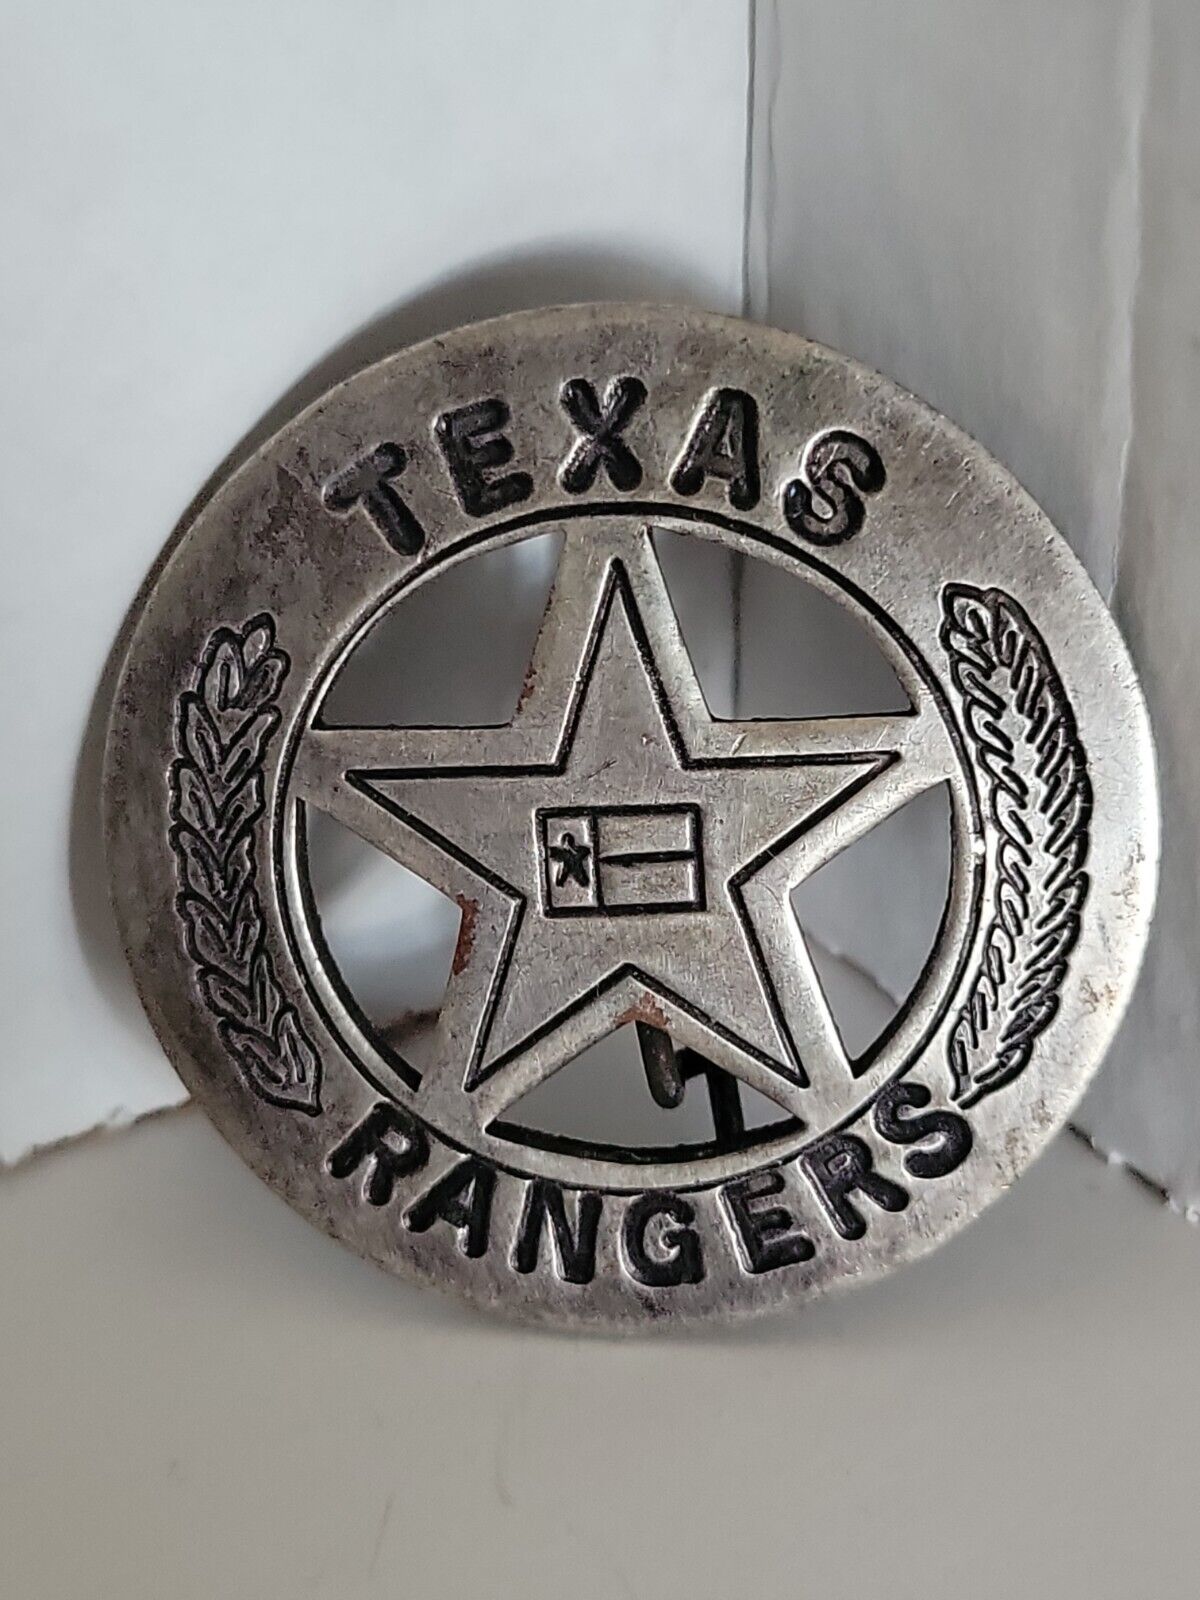 Replica Texas Ranger Badge Old West Western Silver Badge